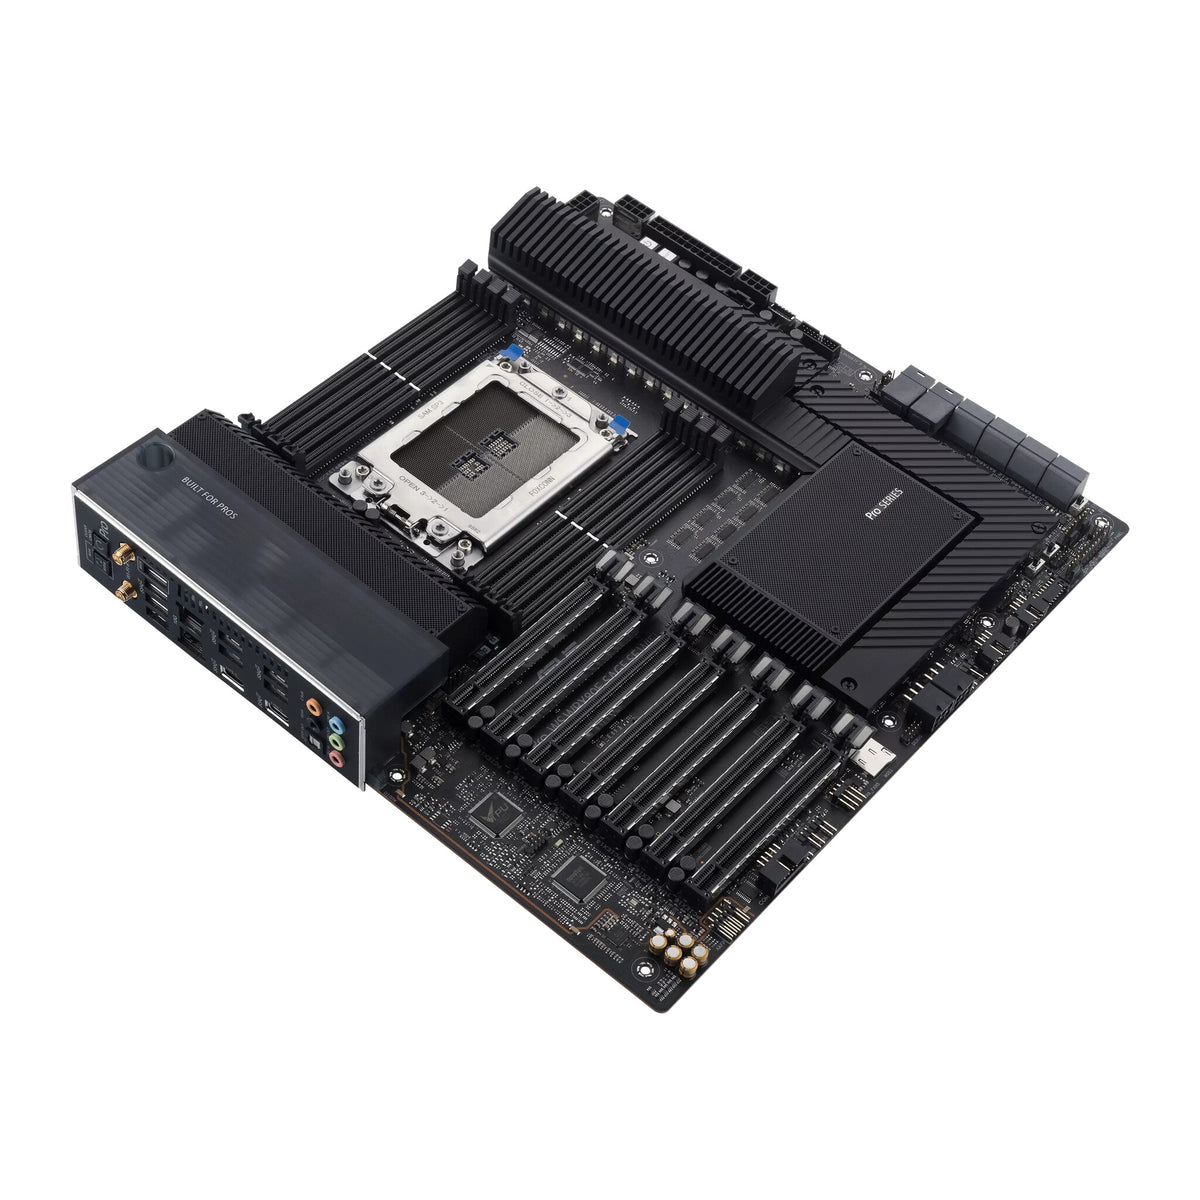 ASUS WRX80E-SAGE SE WIFI Extended ATX motherboard - AMD WRX80 Socket SP3